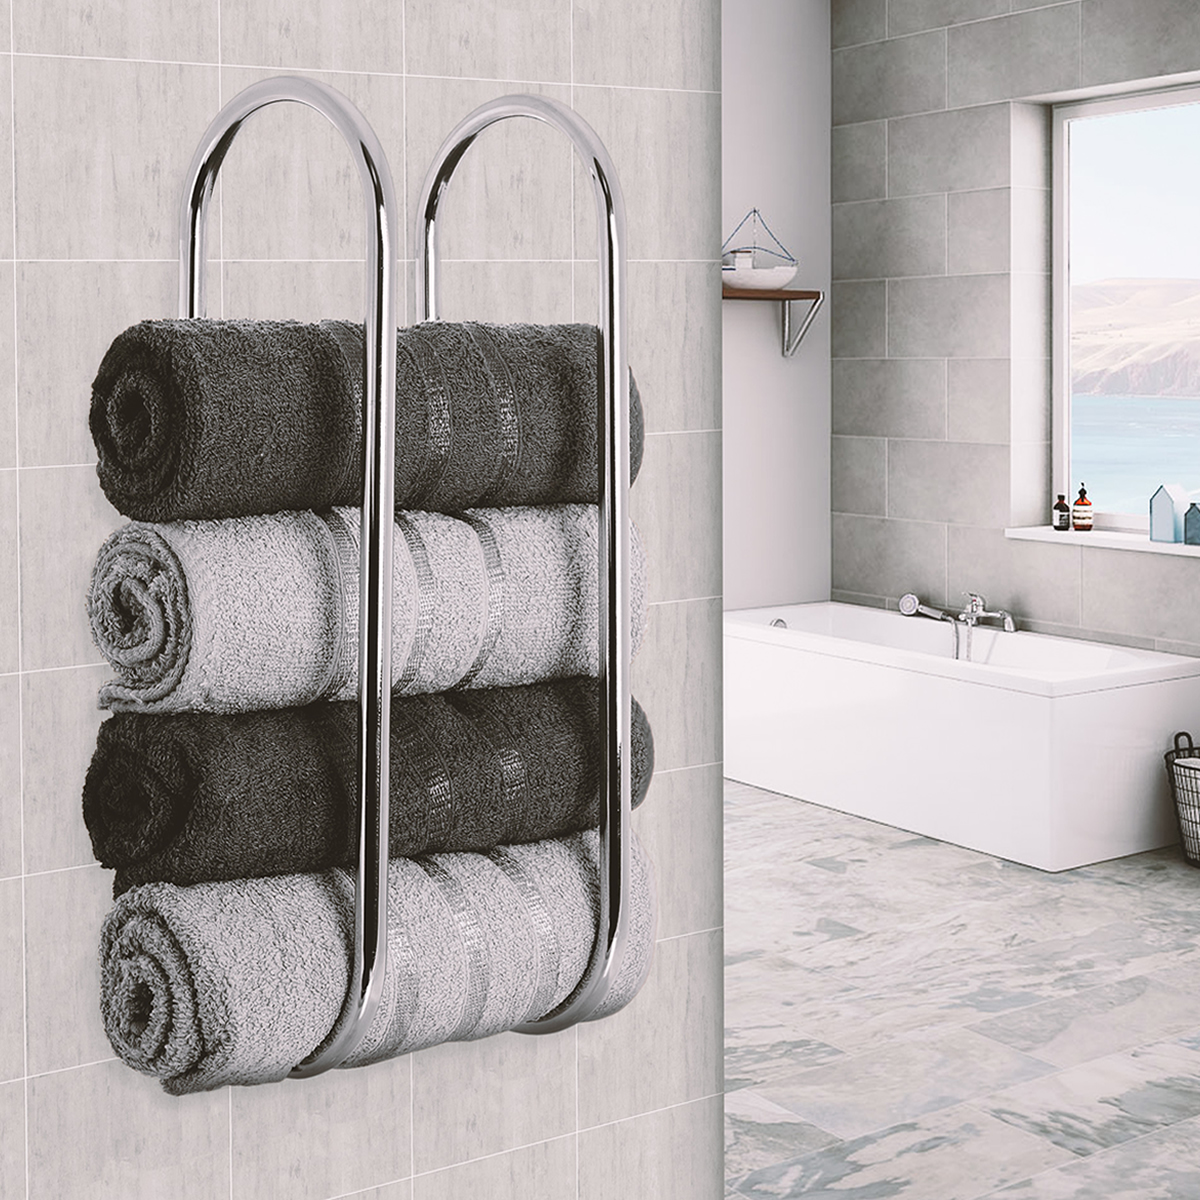 Chrome Finish Wall Mount Bathroom Single Towel Bar Rail Towel Holders lba833 